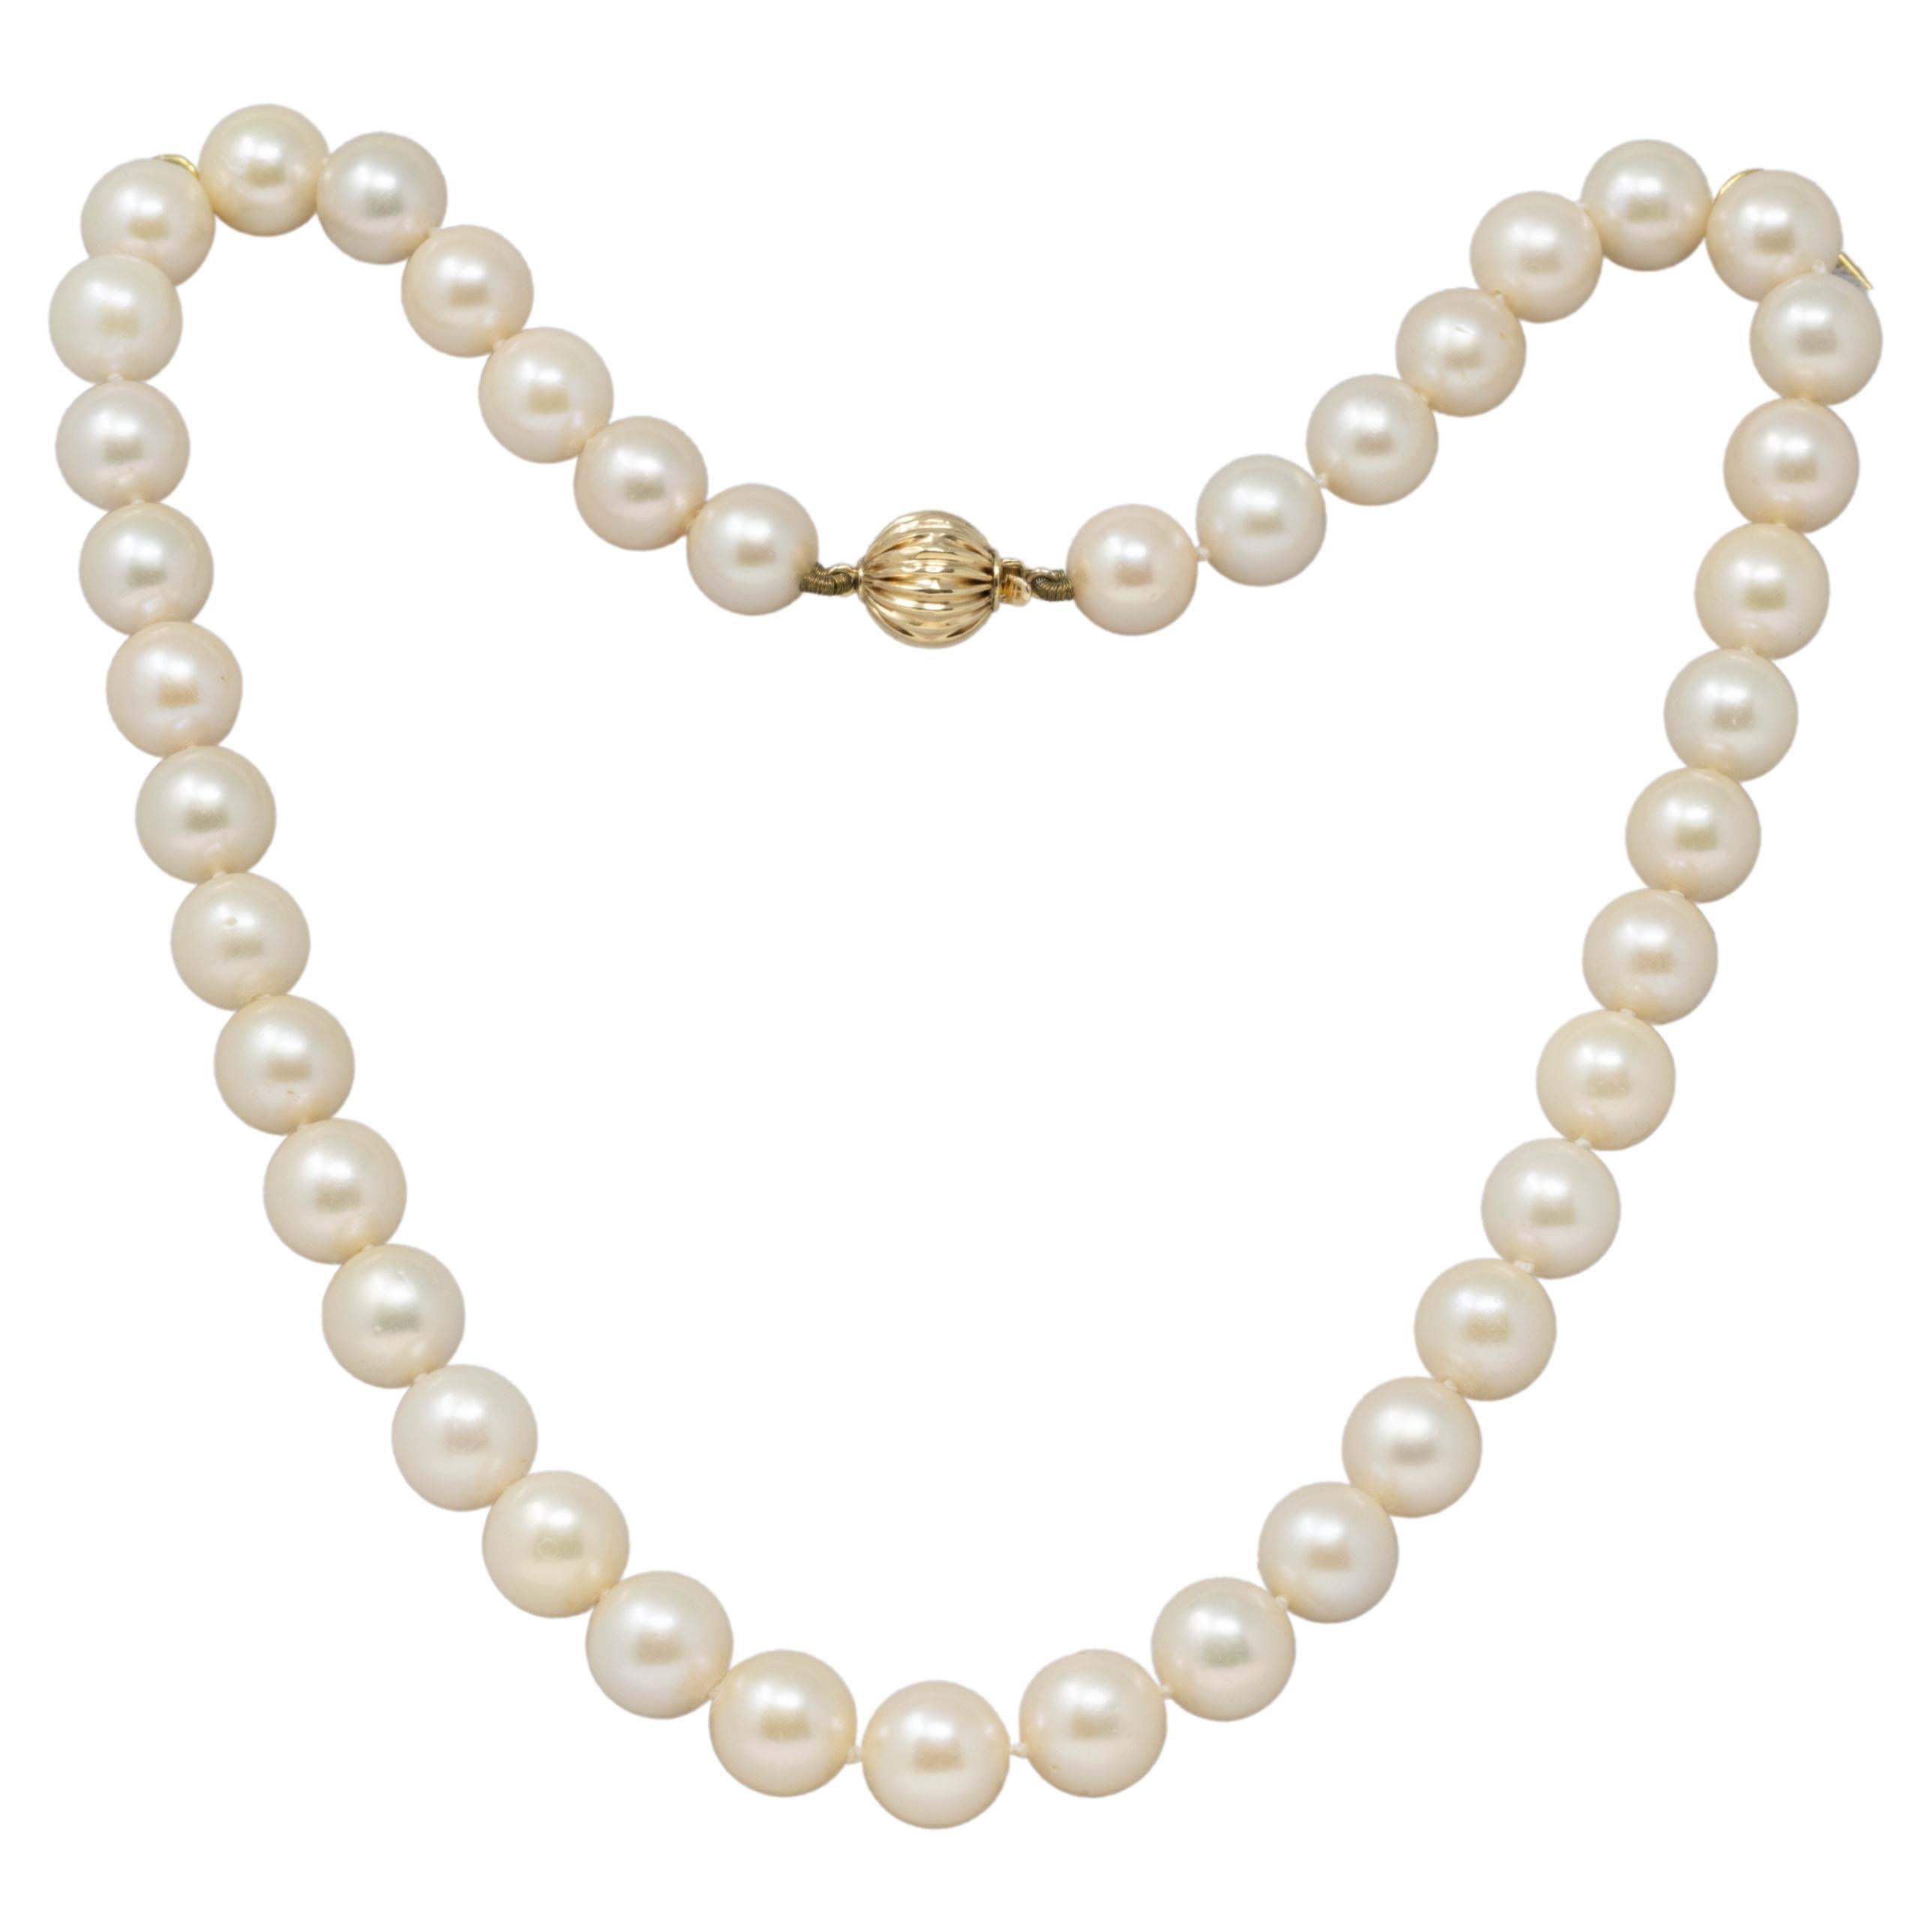 Collier de perles d' Akoya de culture